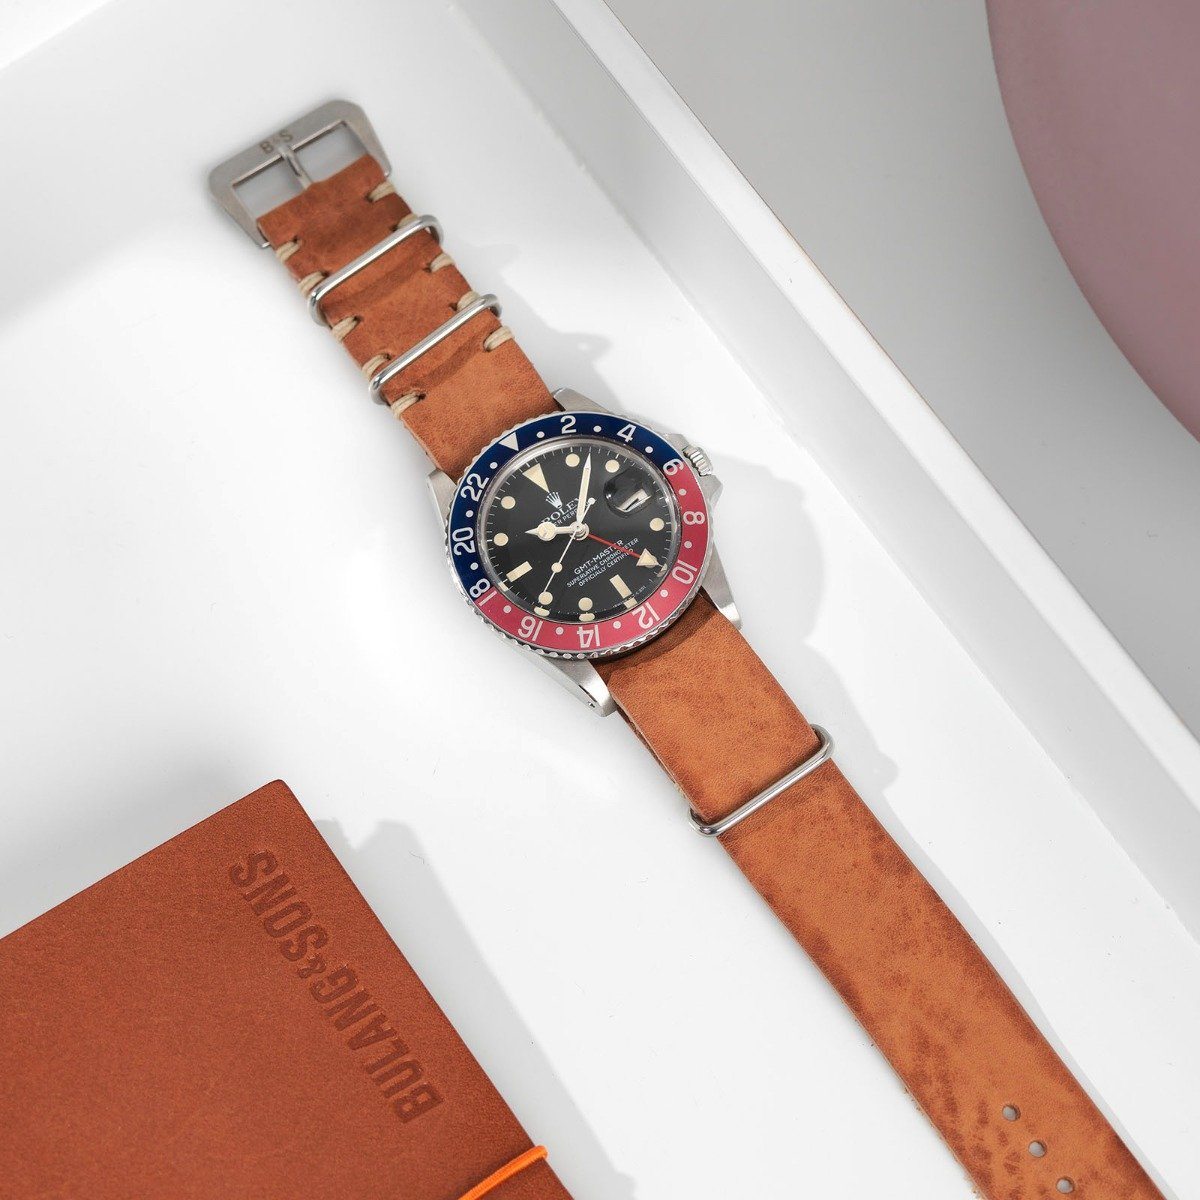 Rolex Caramel Brown Nato Leather Watch Strap